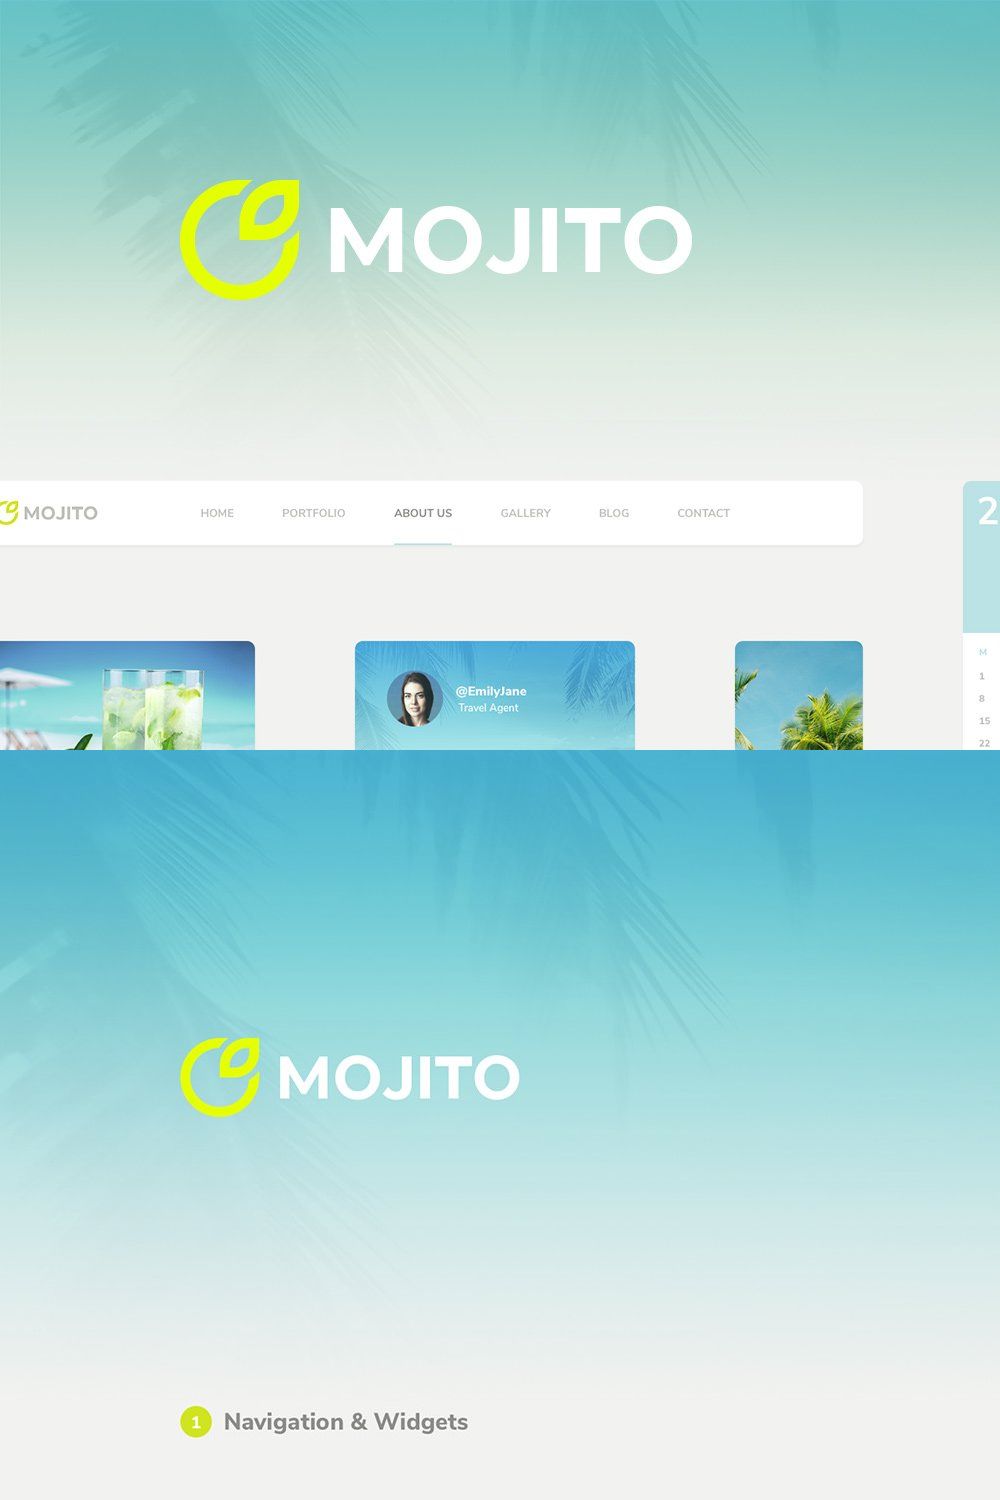 Mojito UI Kit pinterest preview image.